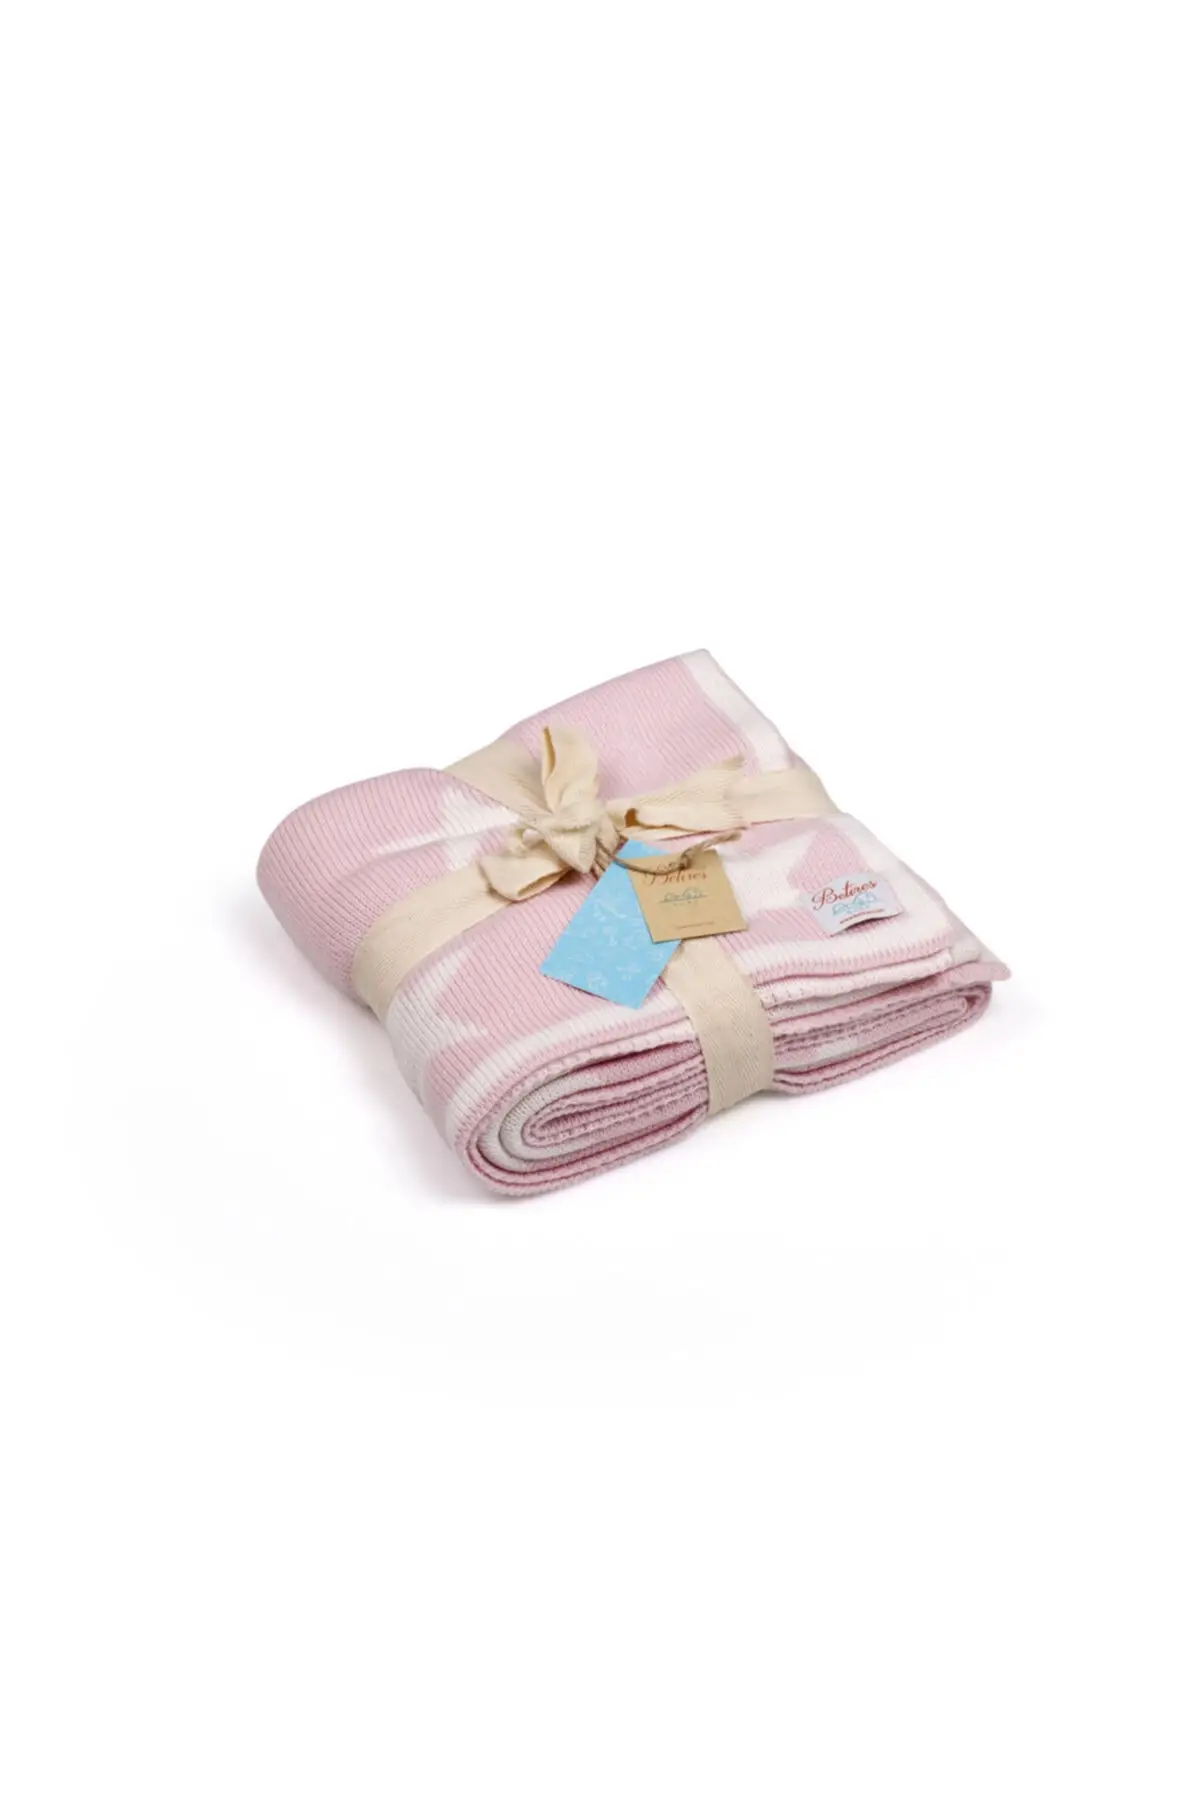 Unisex Pink Knit Baby blanket 90x90 cm Baby & Kids Blanket Home Textile Textile & Furniture